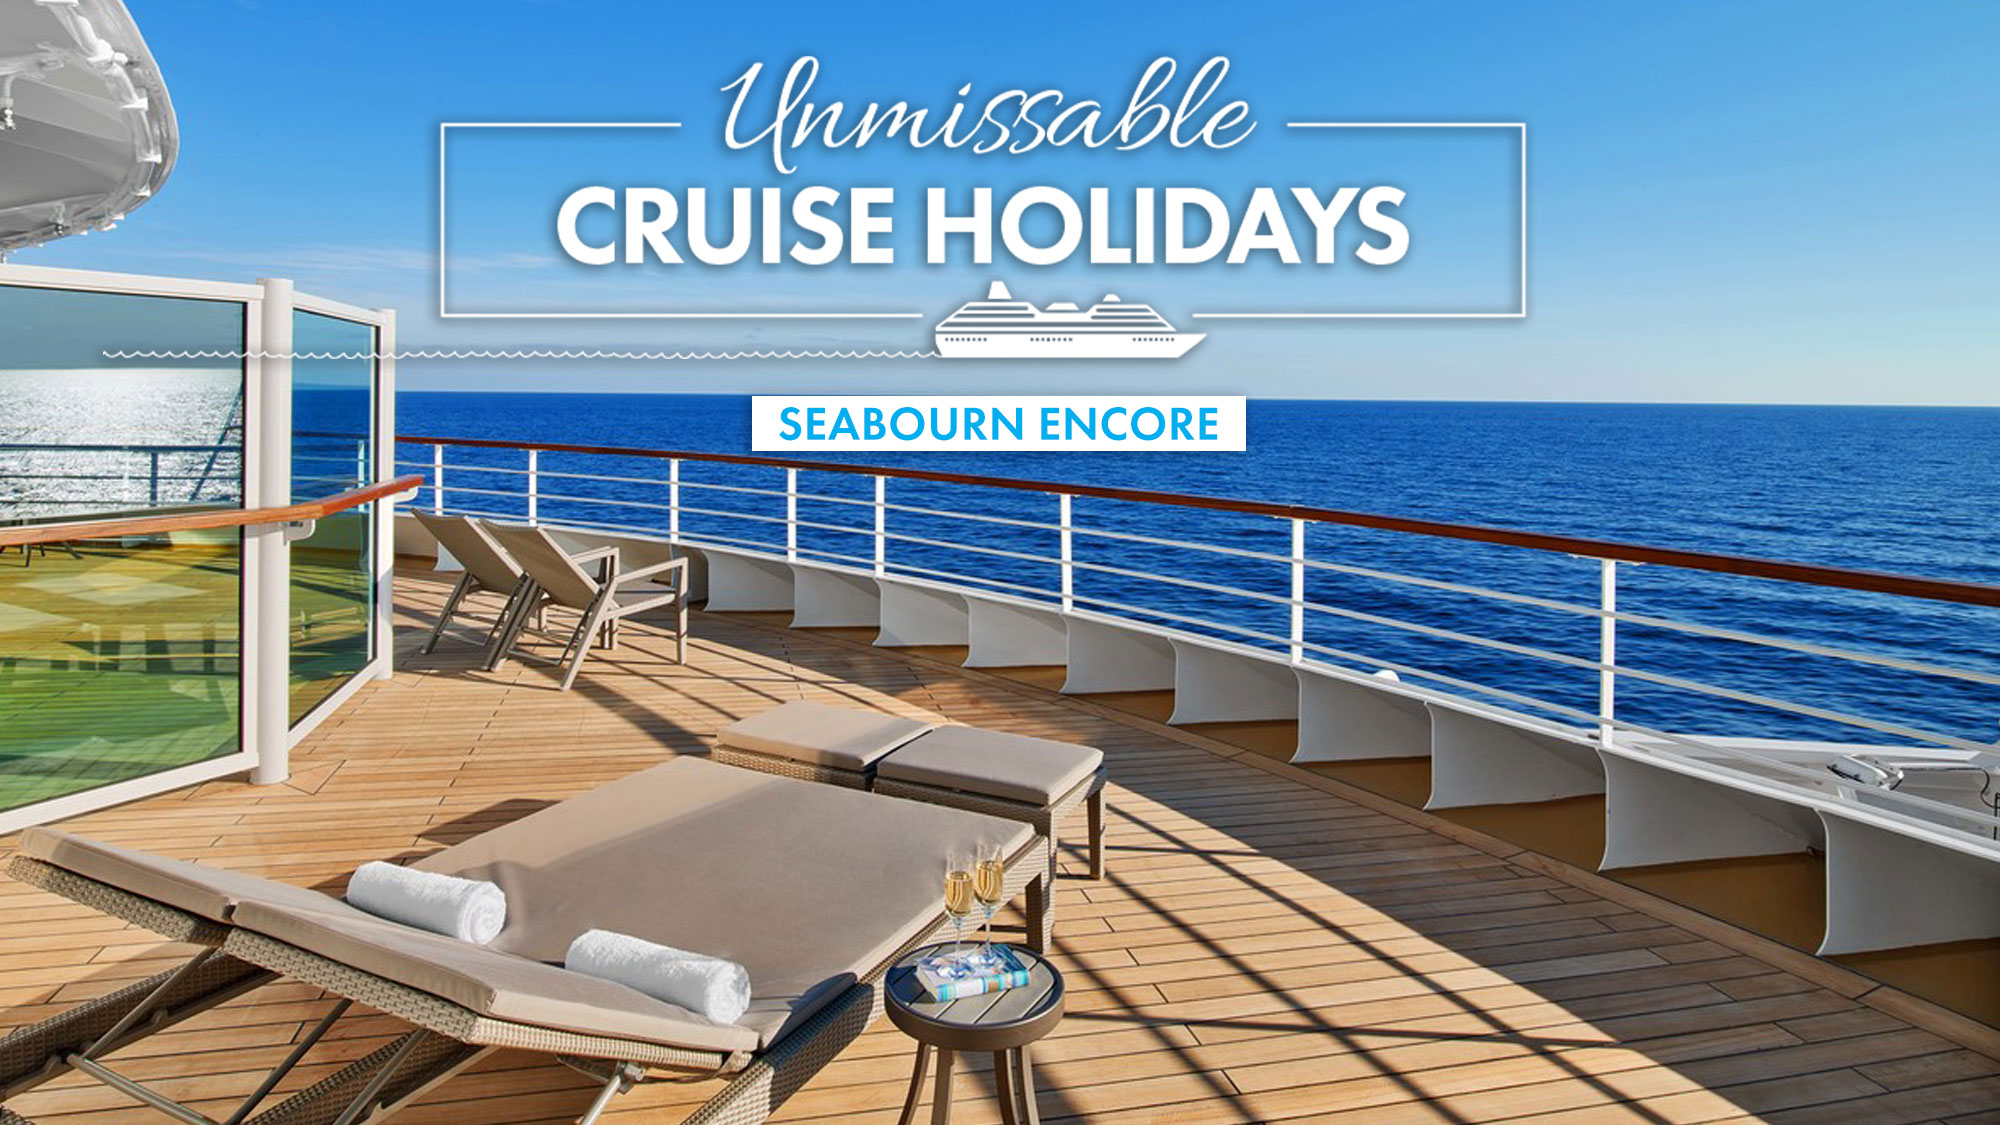 Greek Islands & Turkey Cruise on Seabourn Encore Holidays of